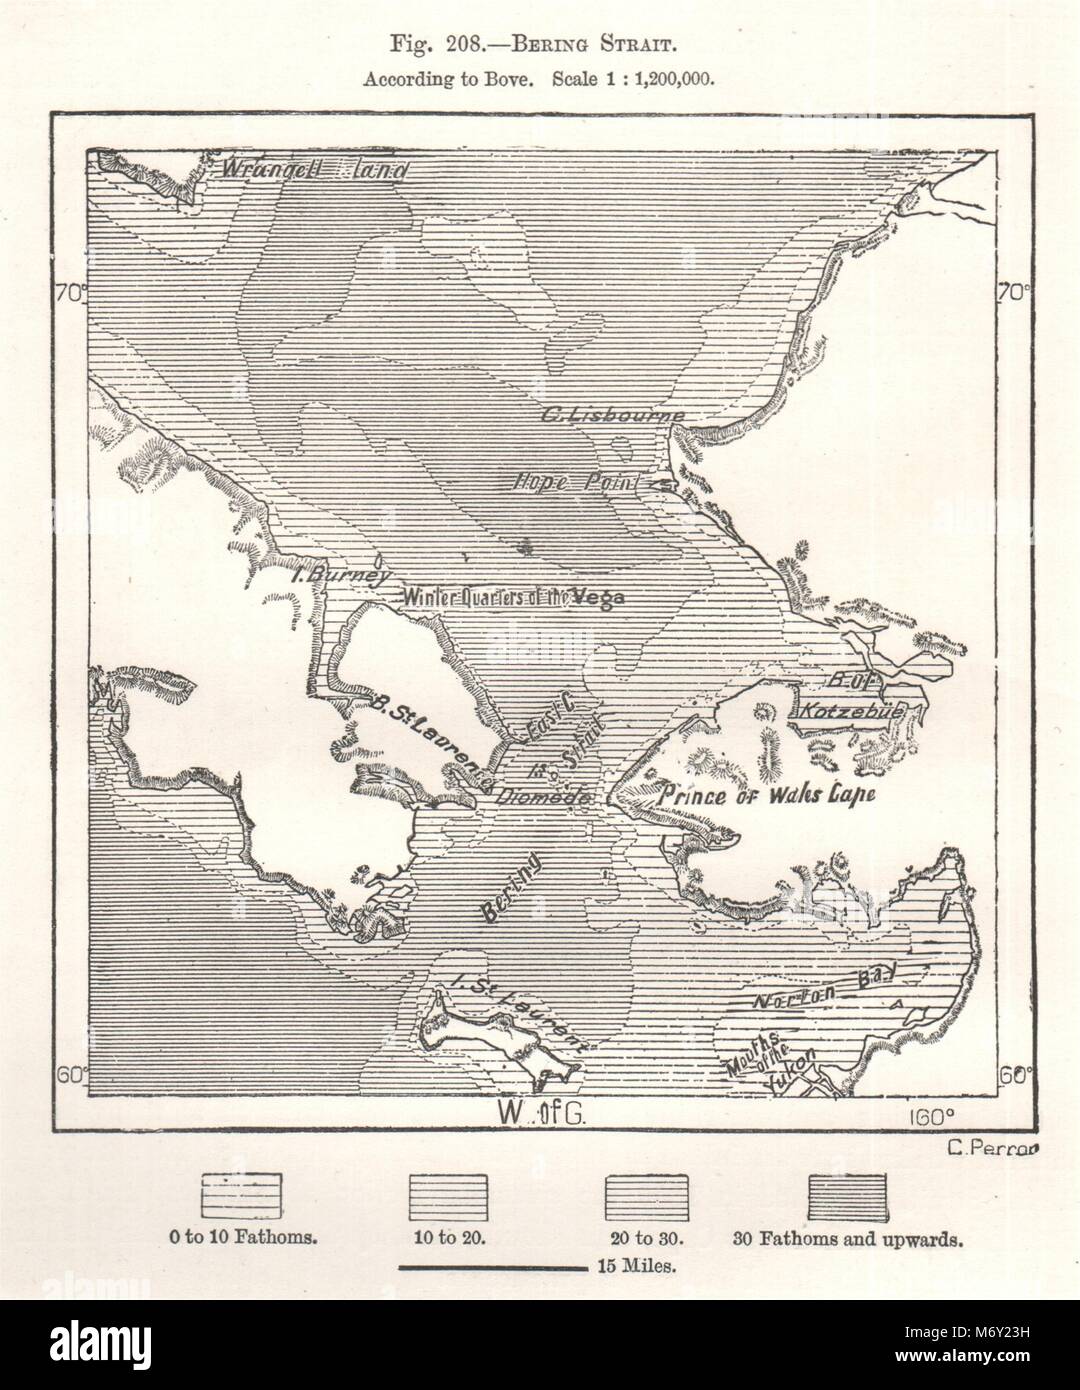 Bering Strait. Alaska Russia. Sketch map 1885 old antique plan chart Stock Photo